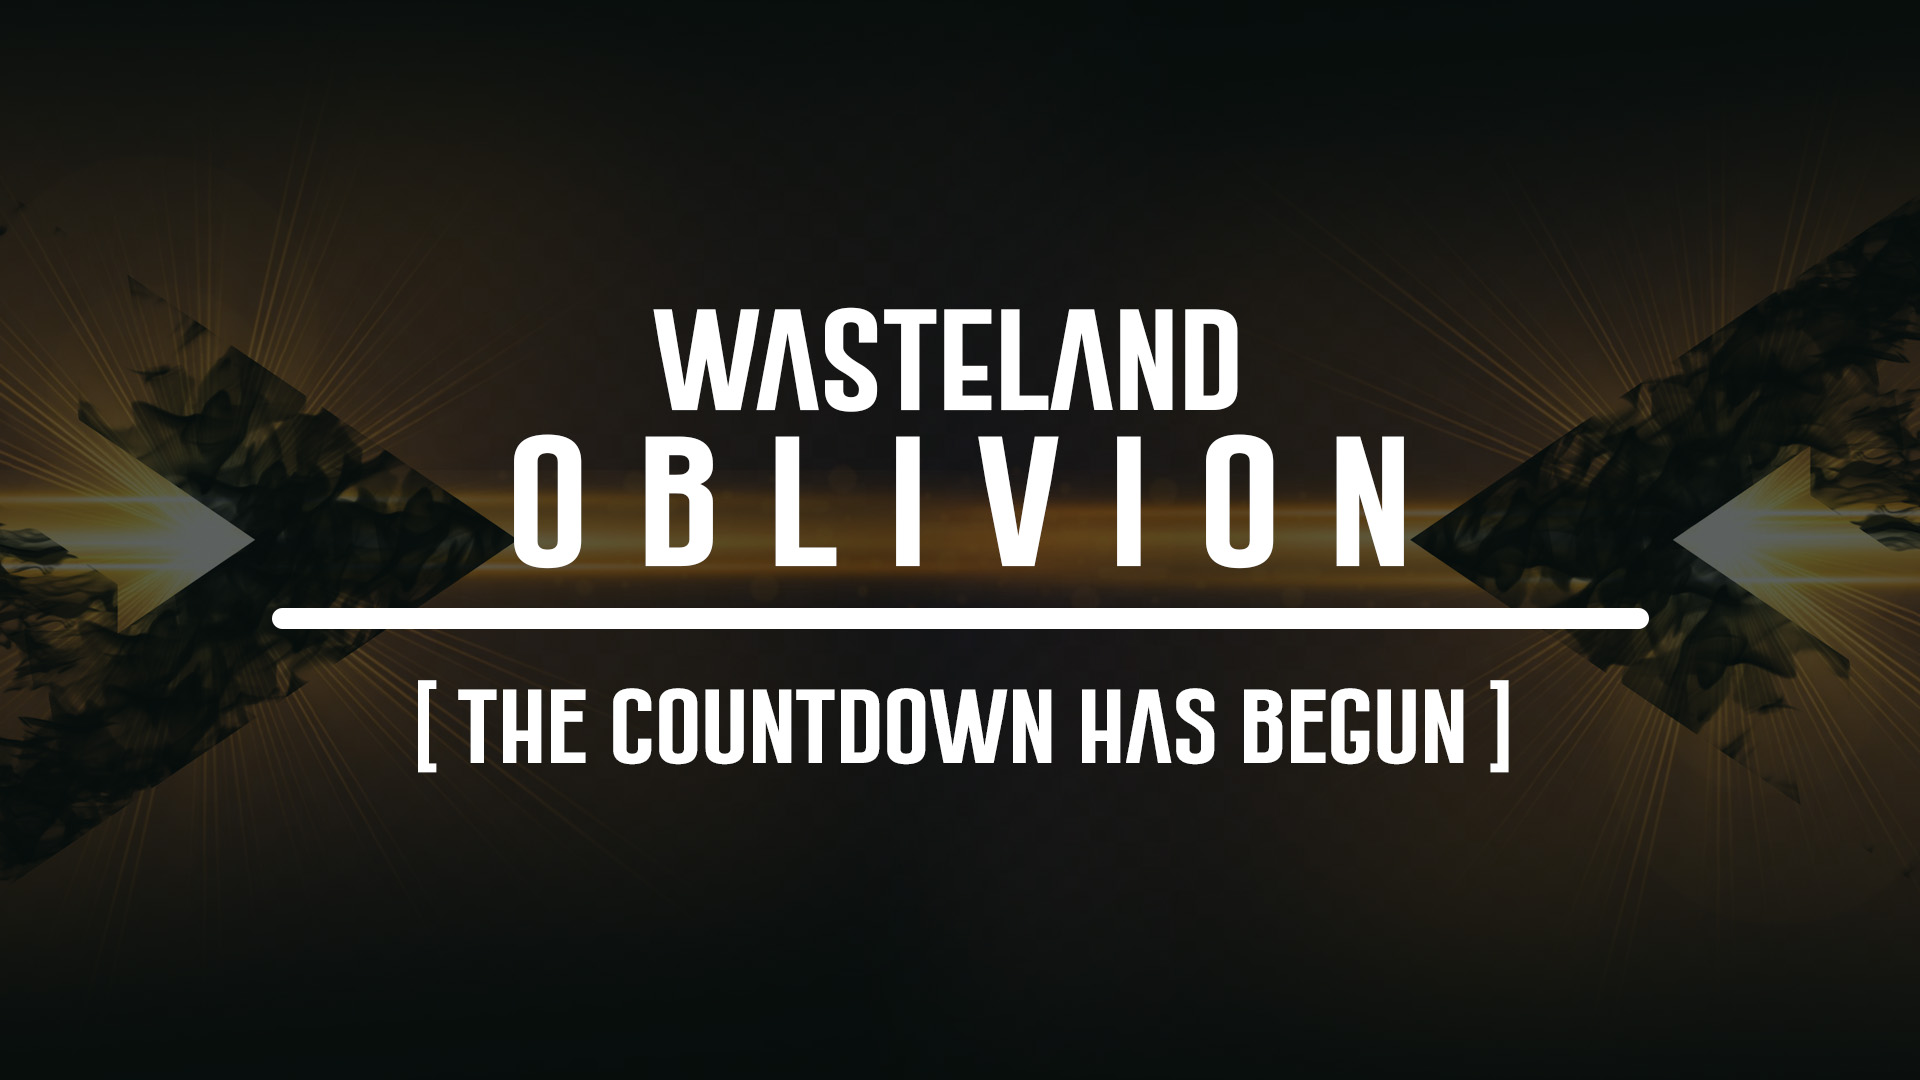 The Countdown Has Begun - Wasteland Oblivion